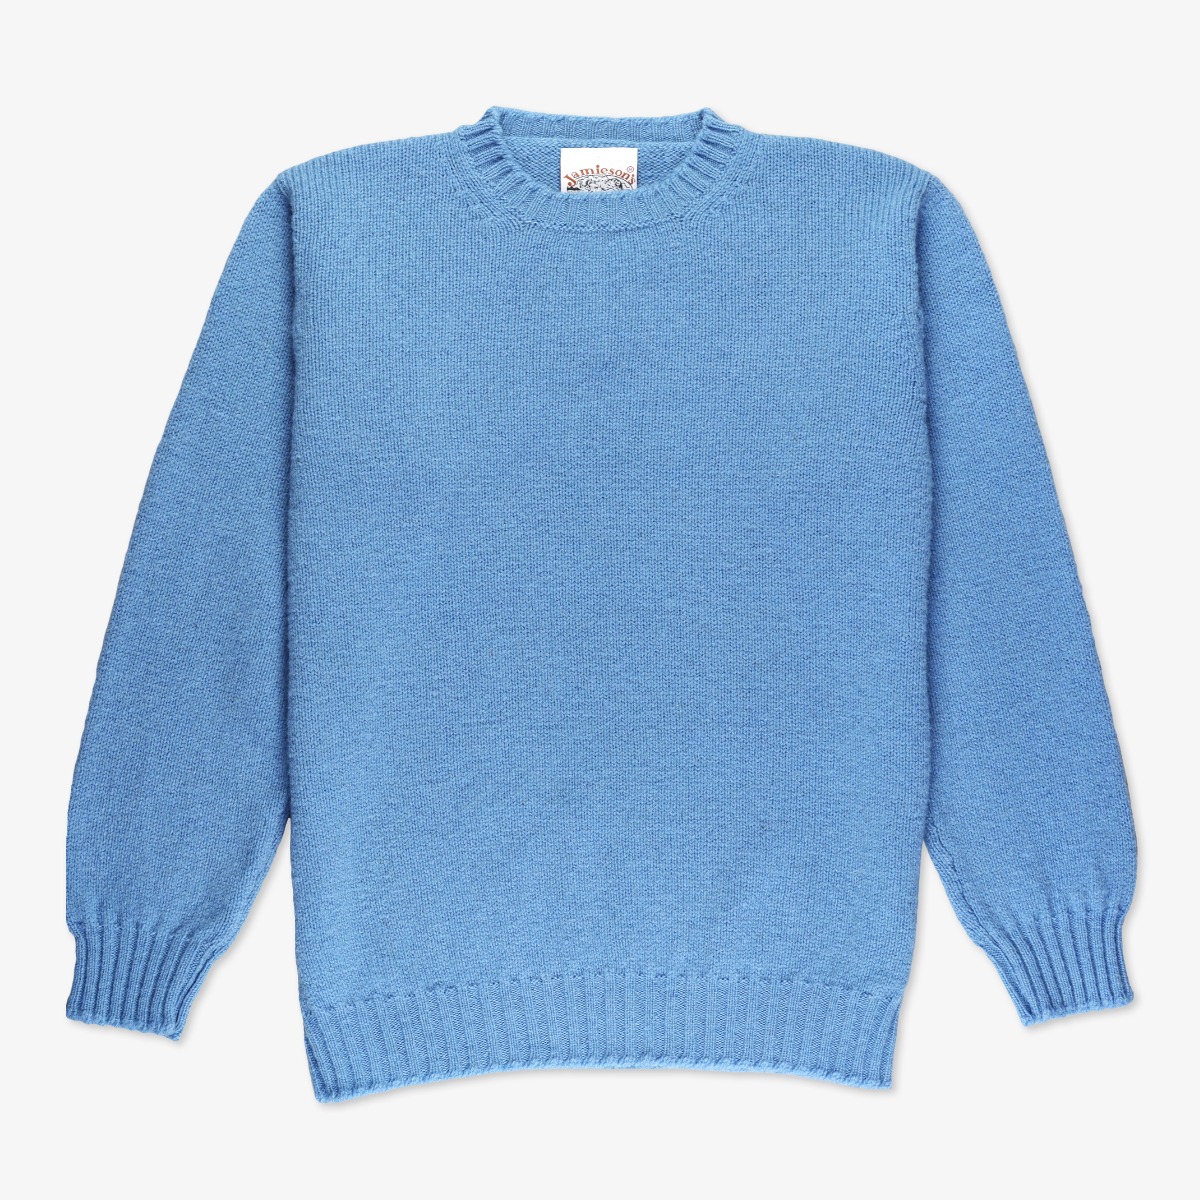 Jamiesons light blue wool crew neck sweater